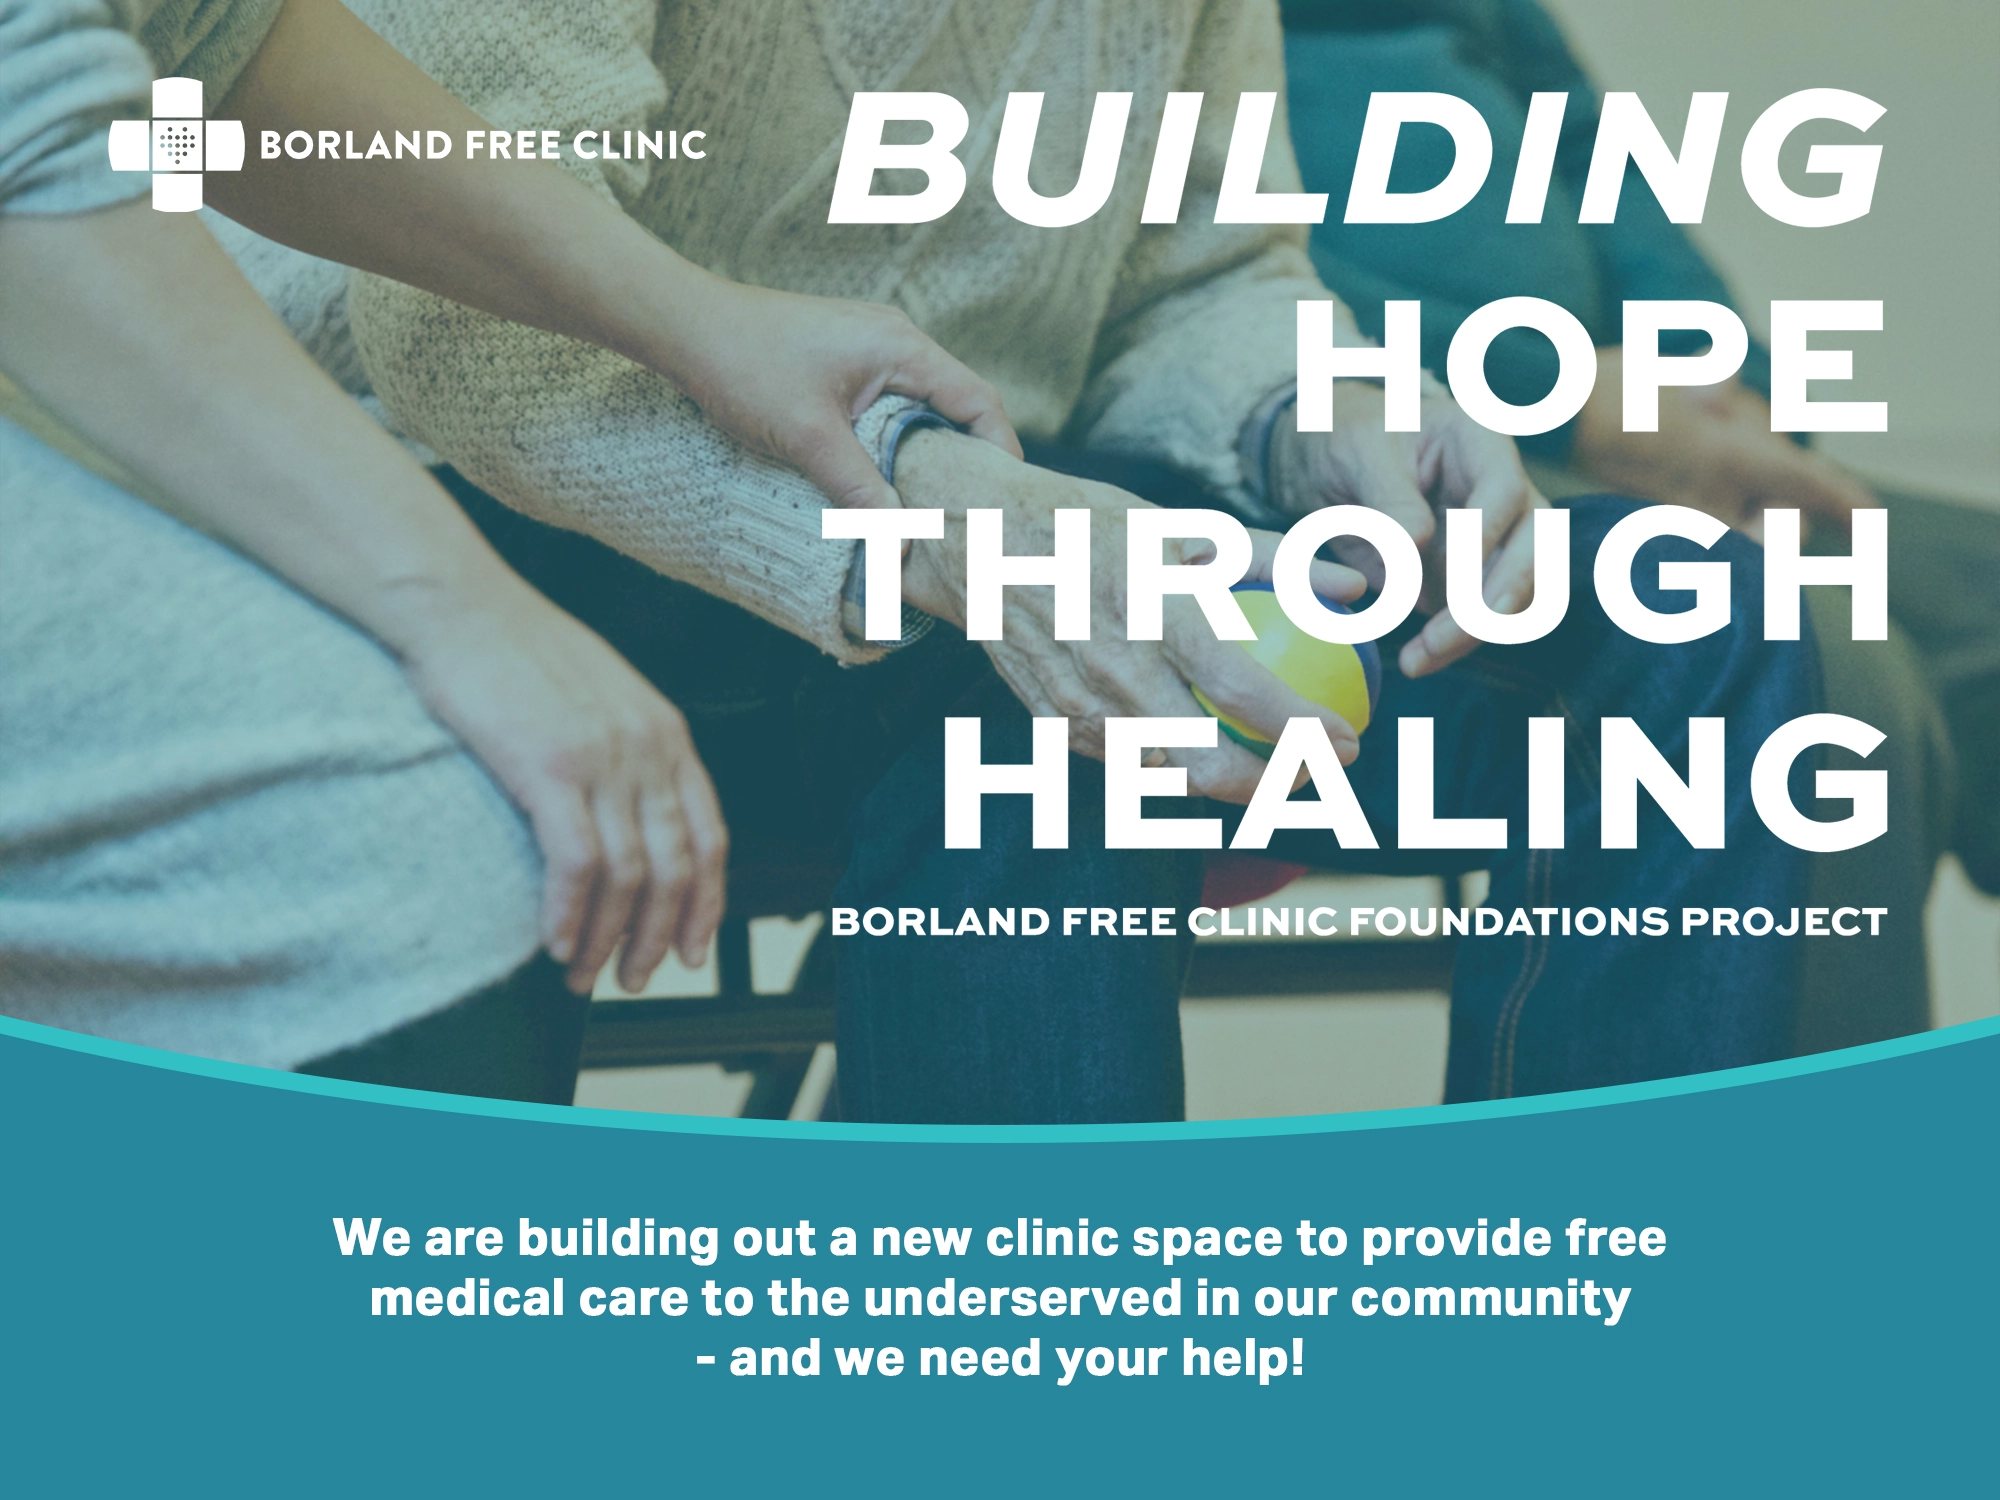 Borland Free Clinic